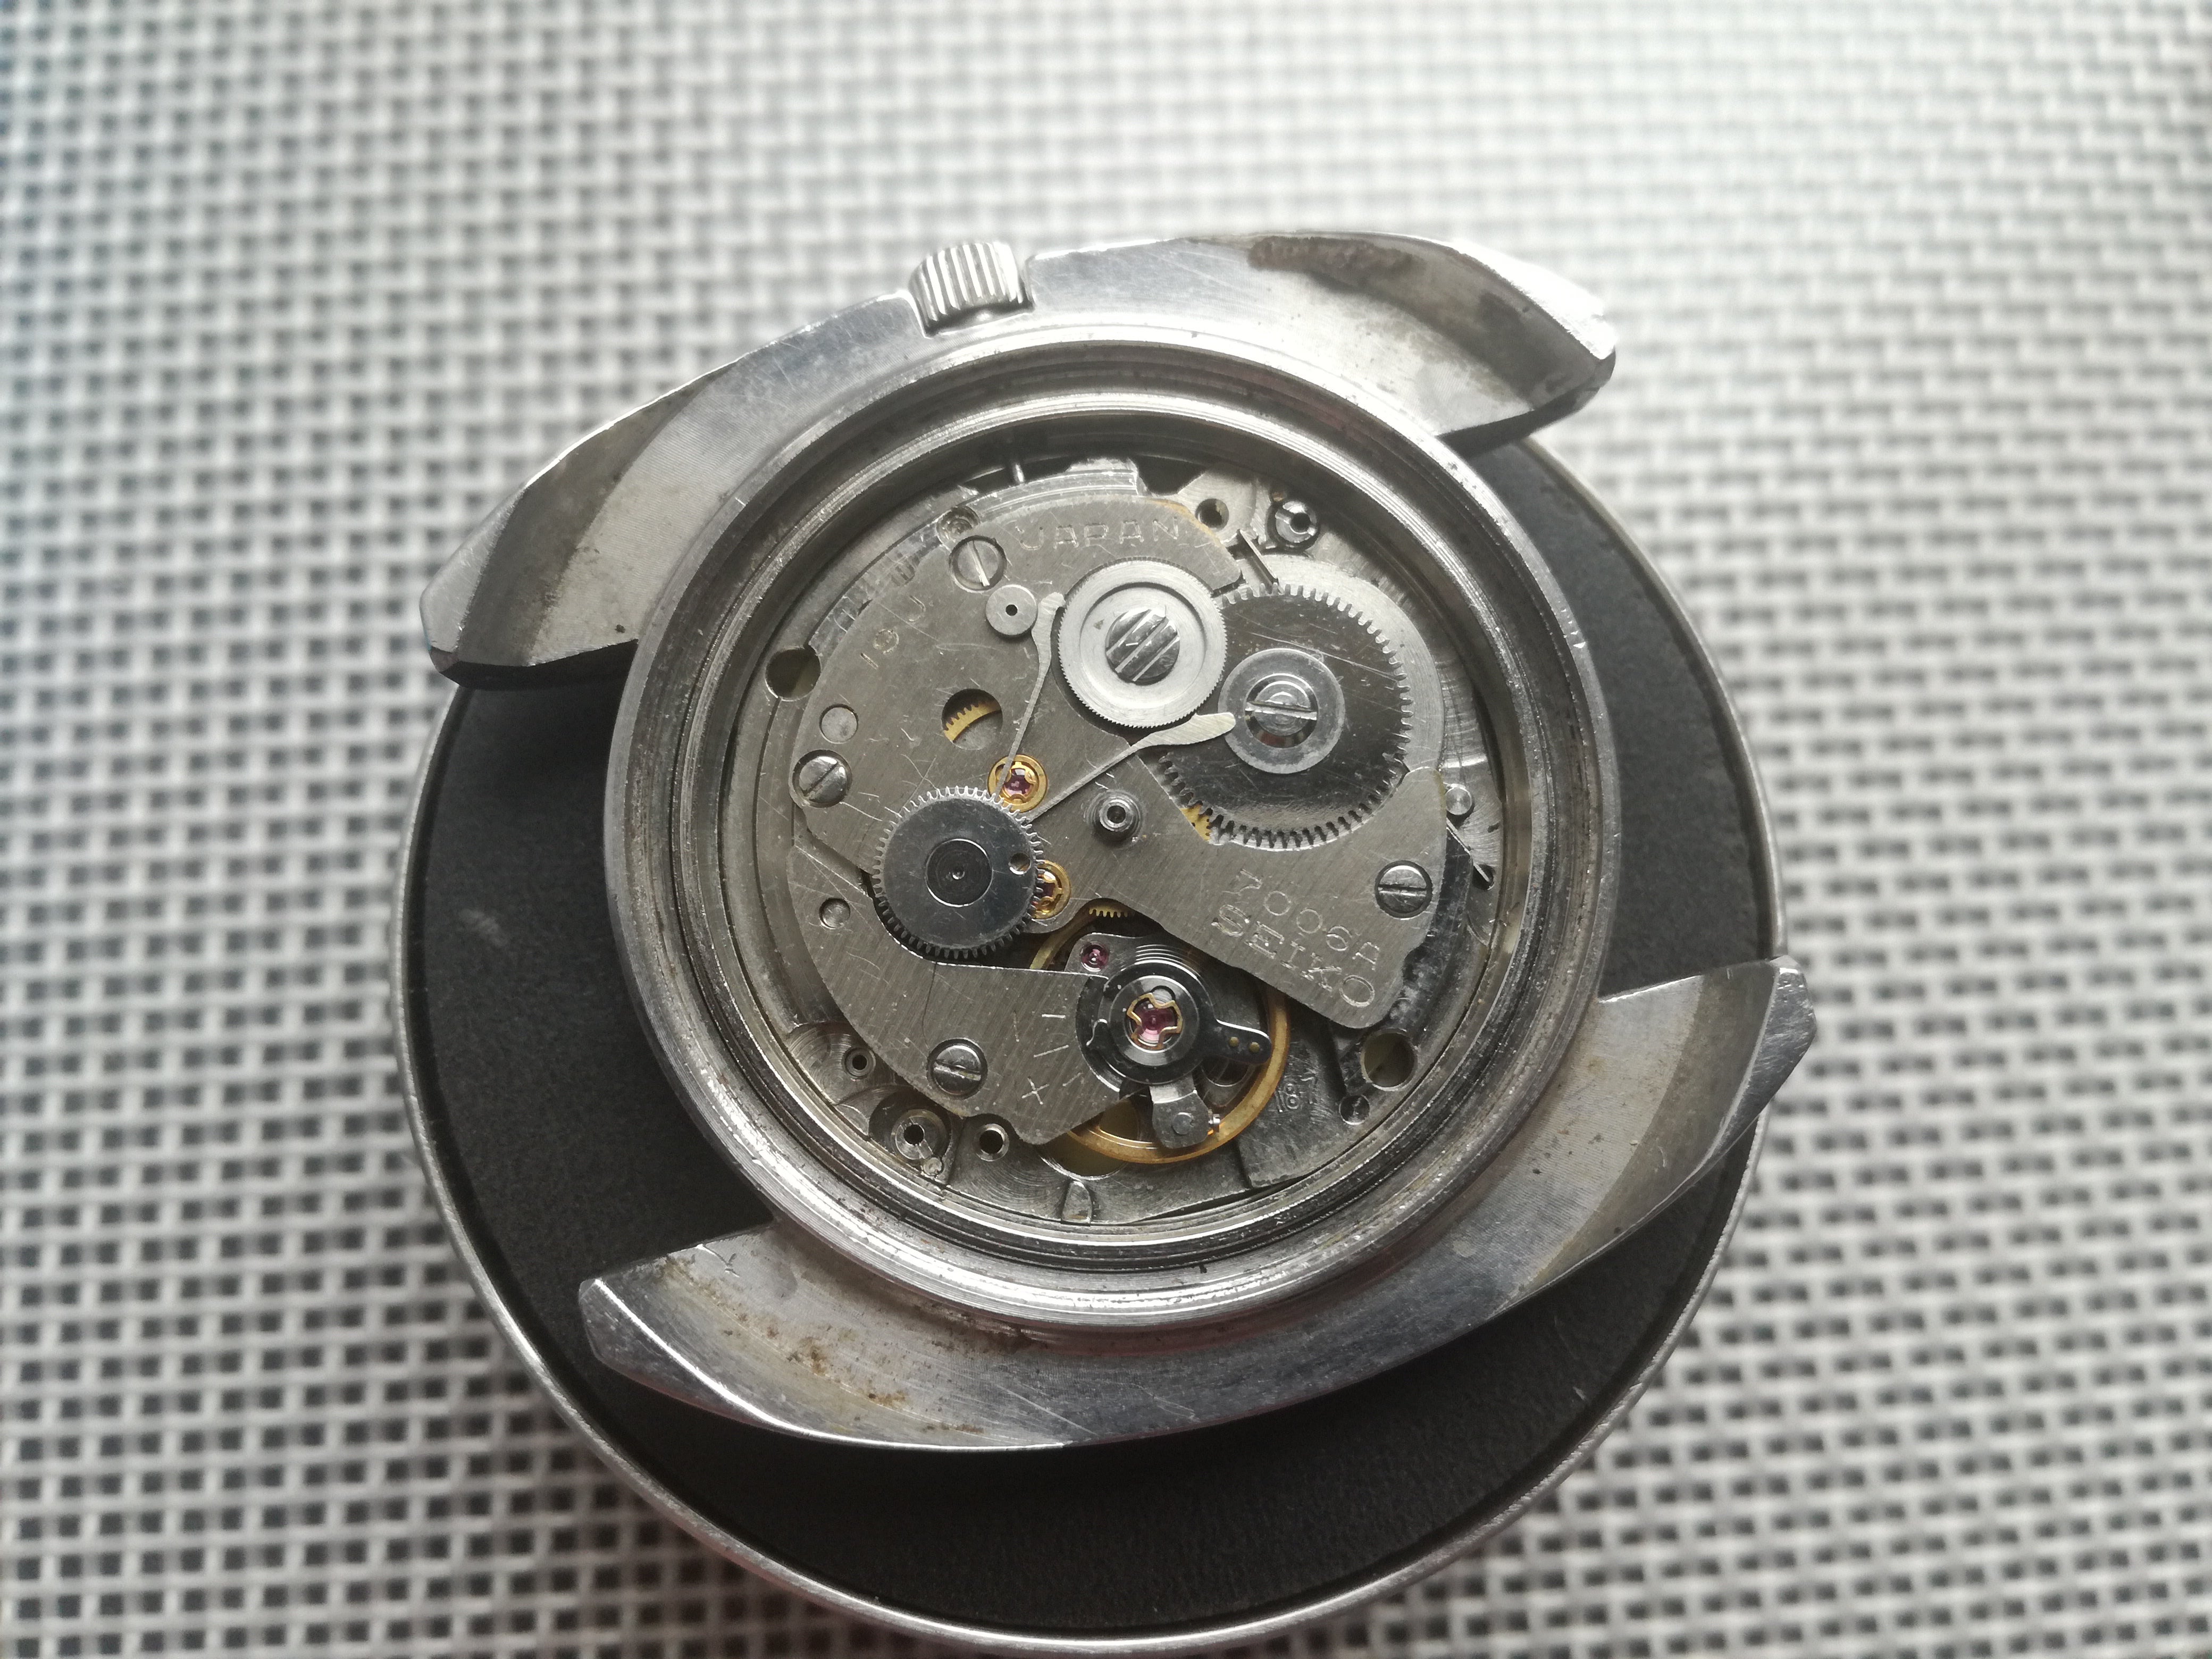 Seiko 7006-7020 restoration | The Watch Site